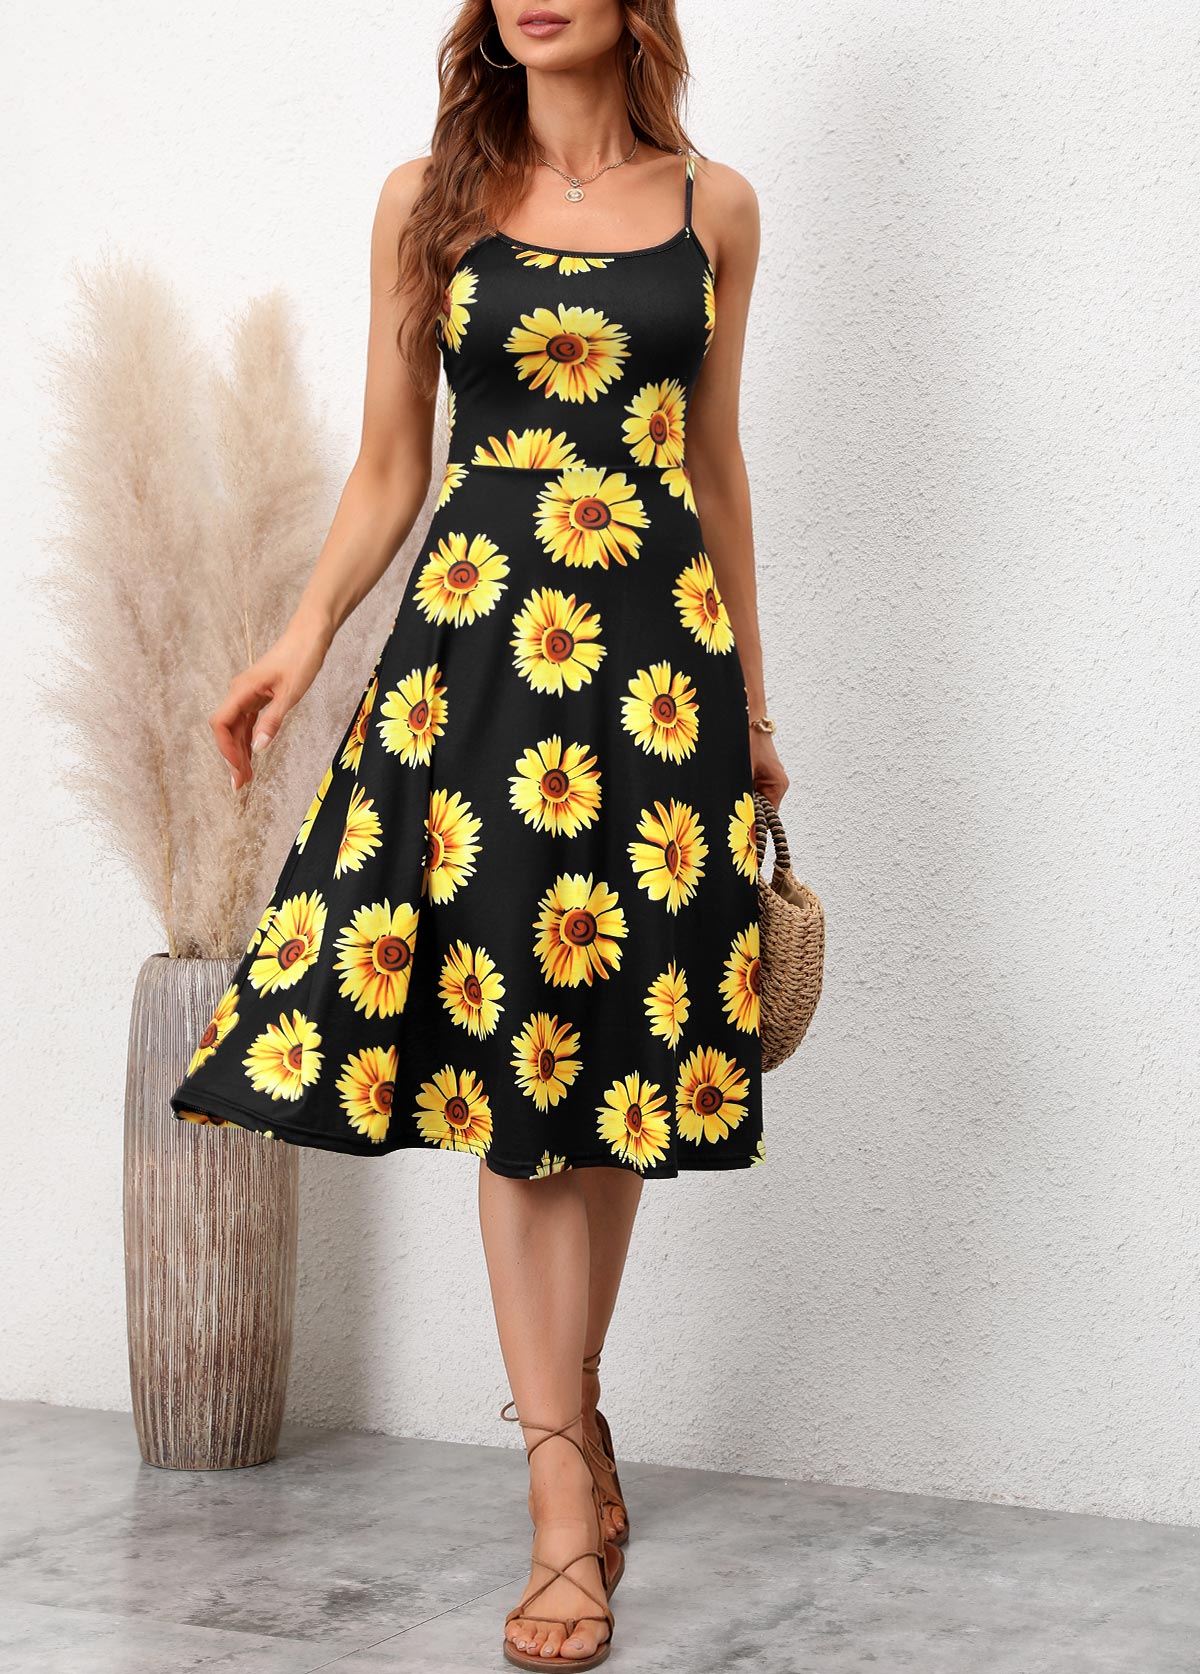 Sunflower Print Black Spaghetti Strap Dress